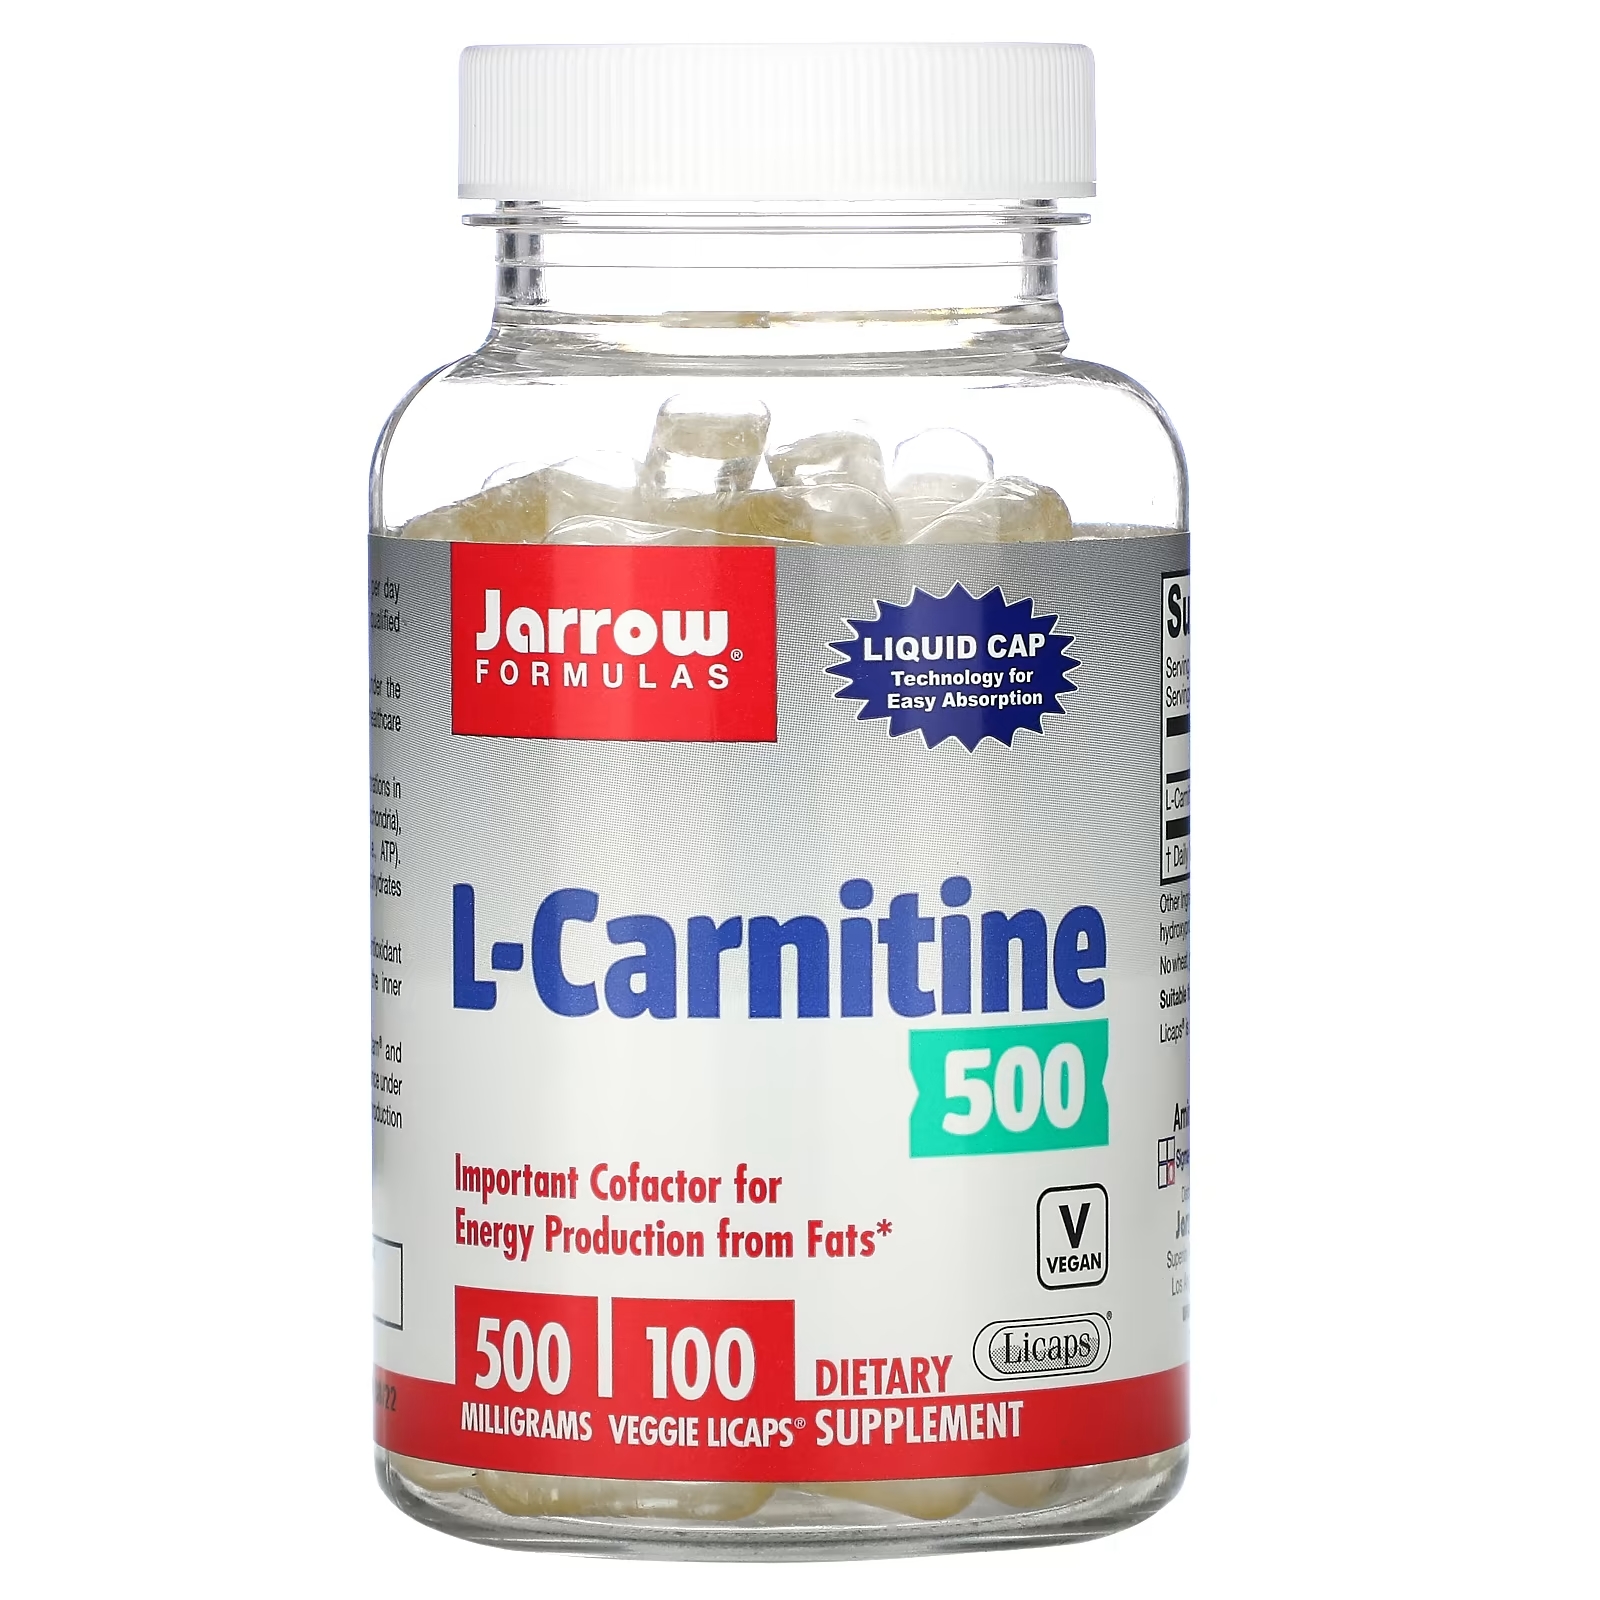 Jarrow Formulas L-карнитин 500 500 мг, 100 вегетарианских капсул Licaps jarrow formulas l карнитин 500 500 мг 100 вегетарианских капсул licaps